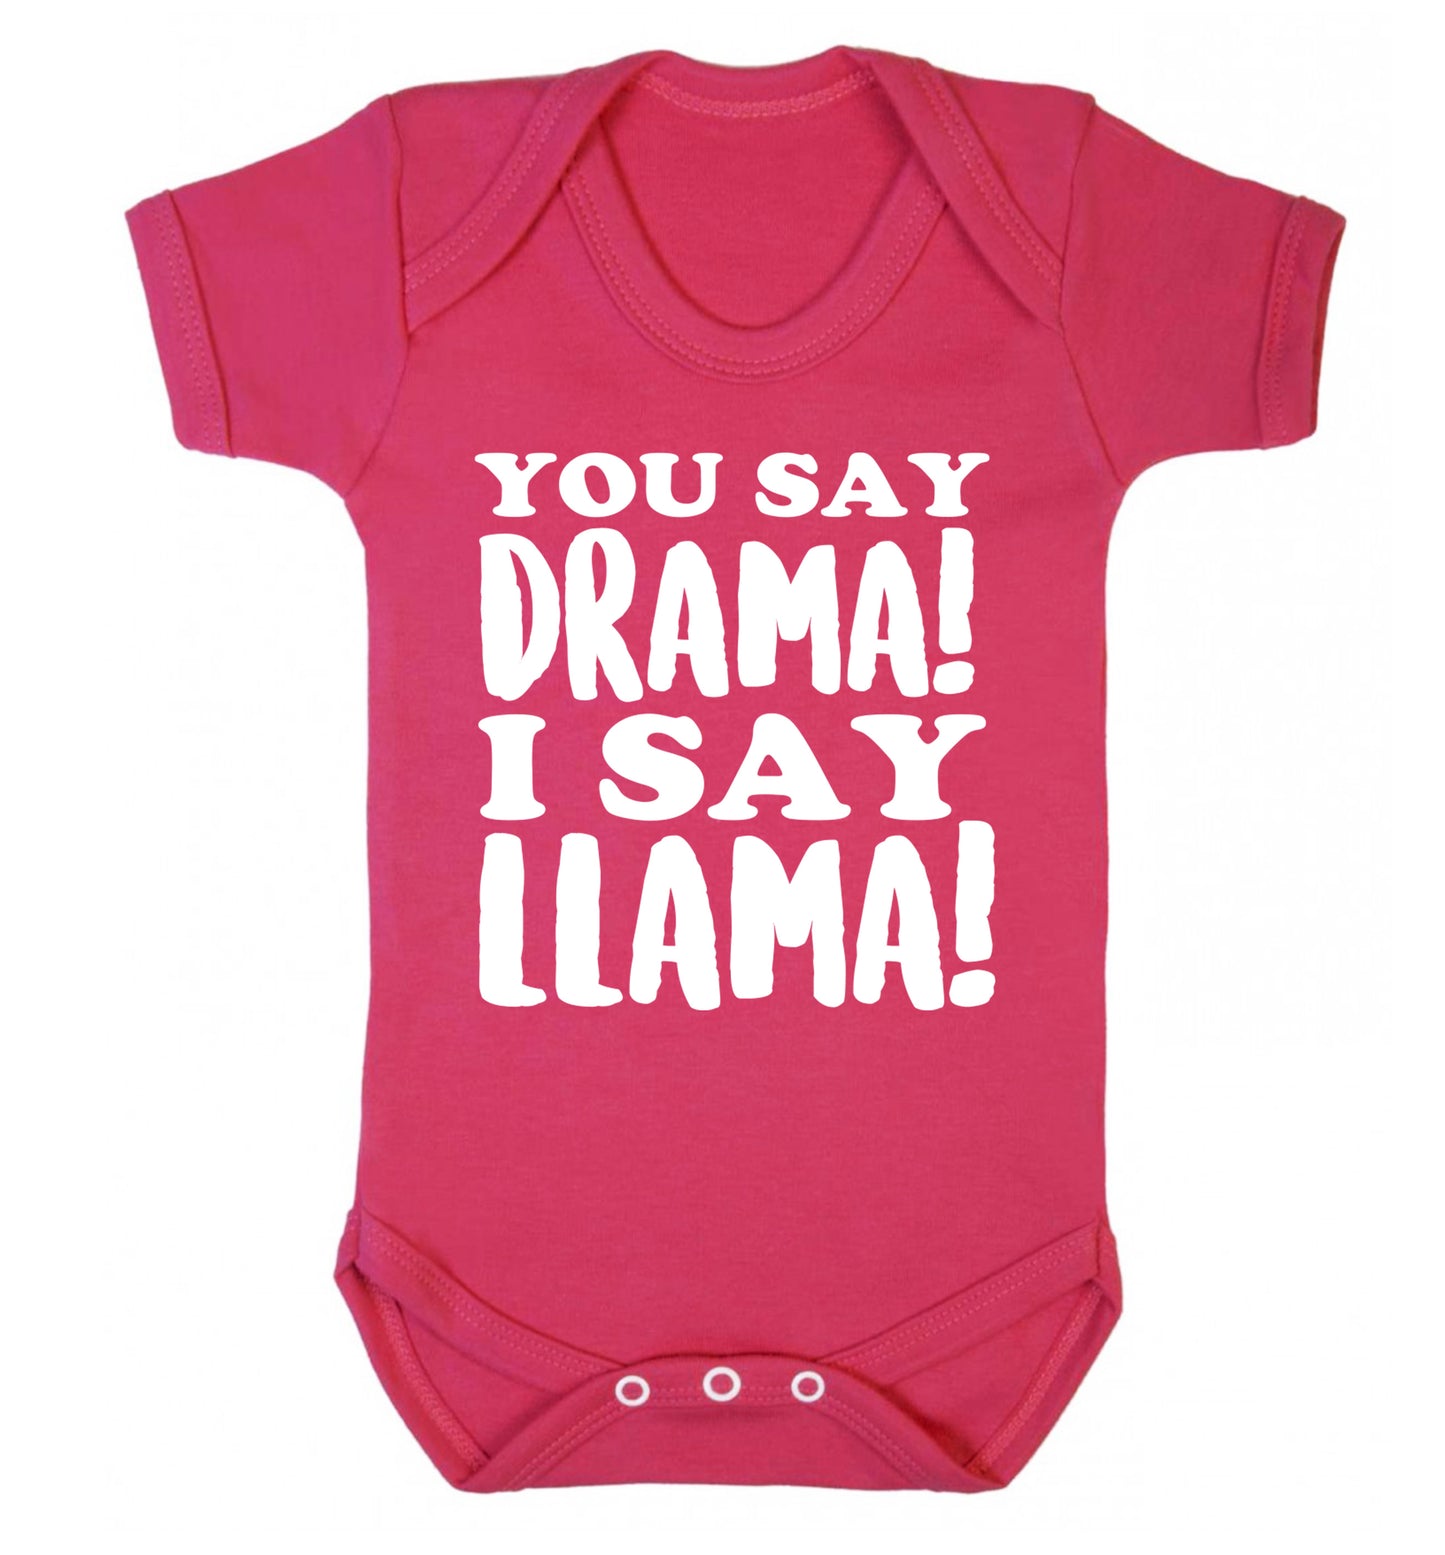 You say drama I say llama! Baby Vest dark pink 18-24 months